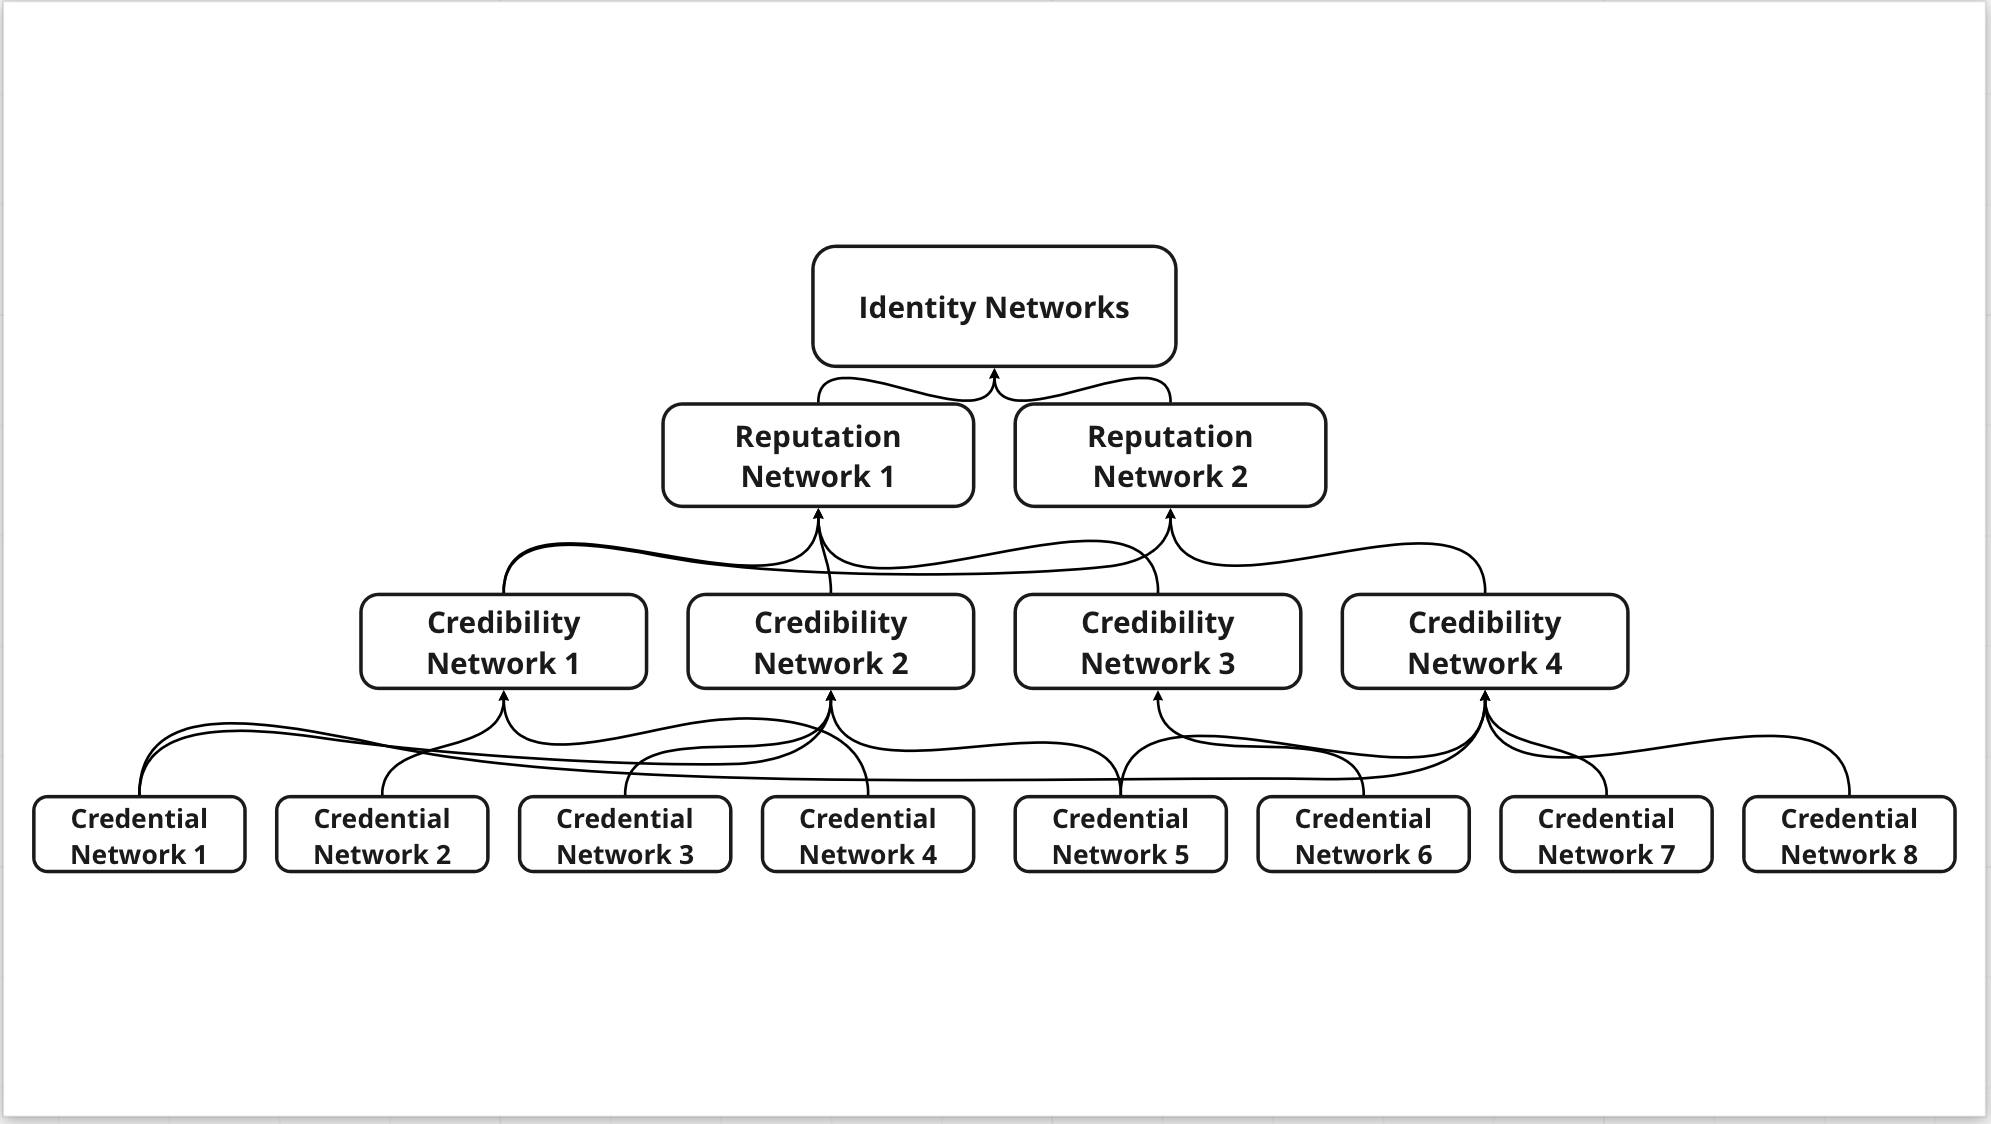 Fig 1. Identity Network Hierarchy